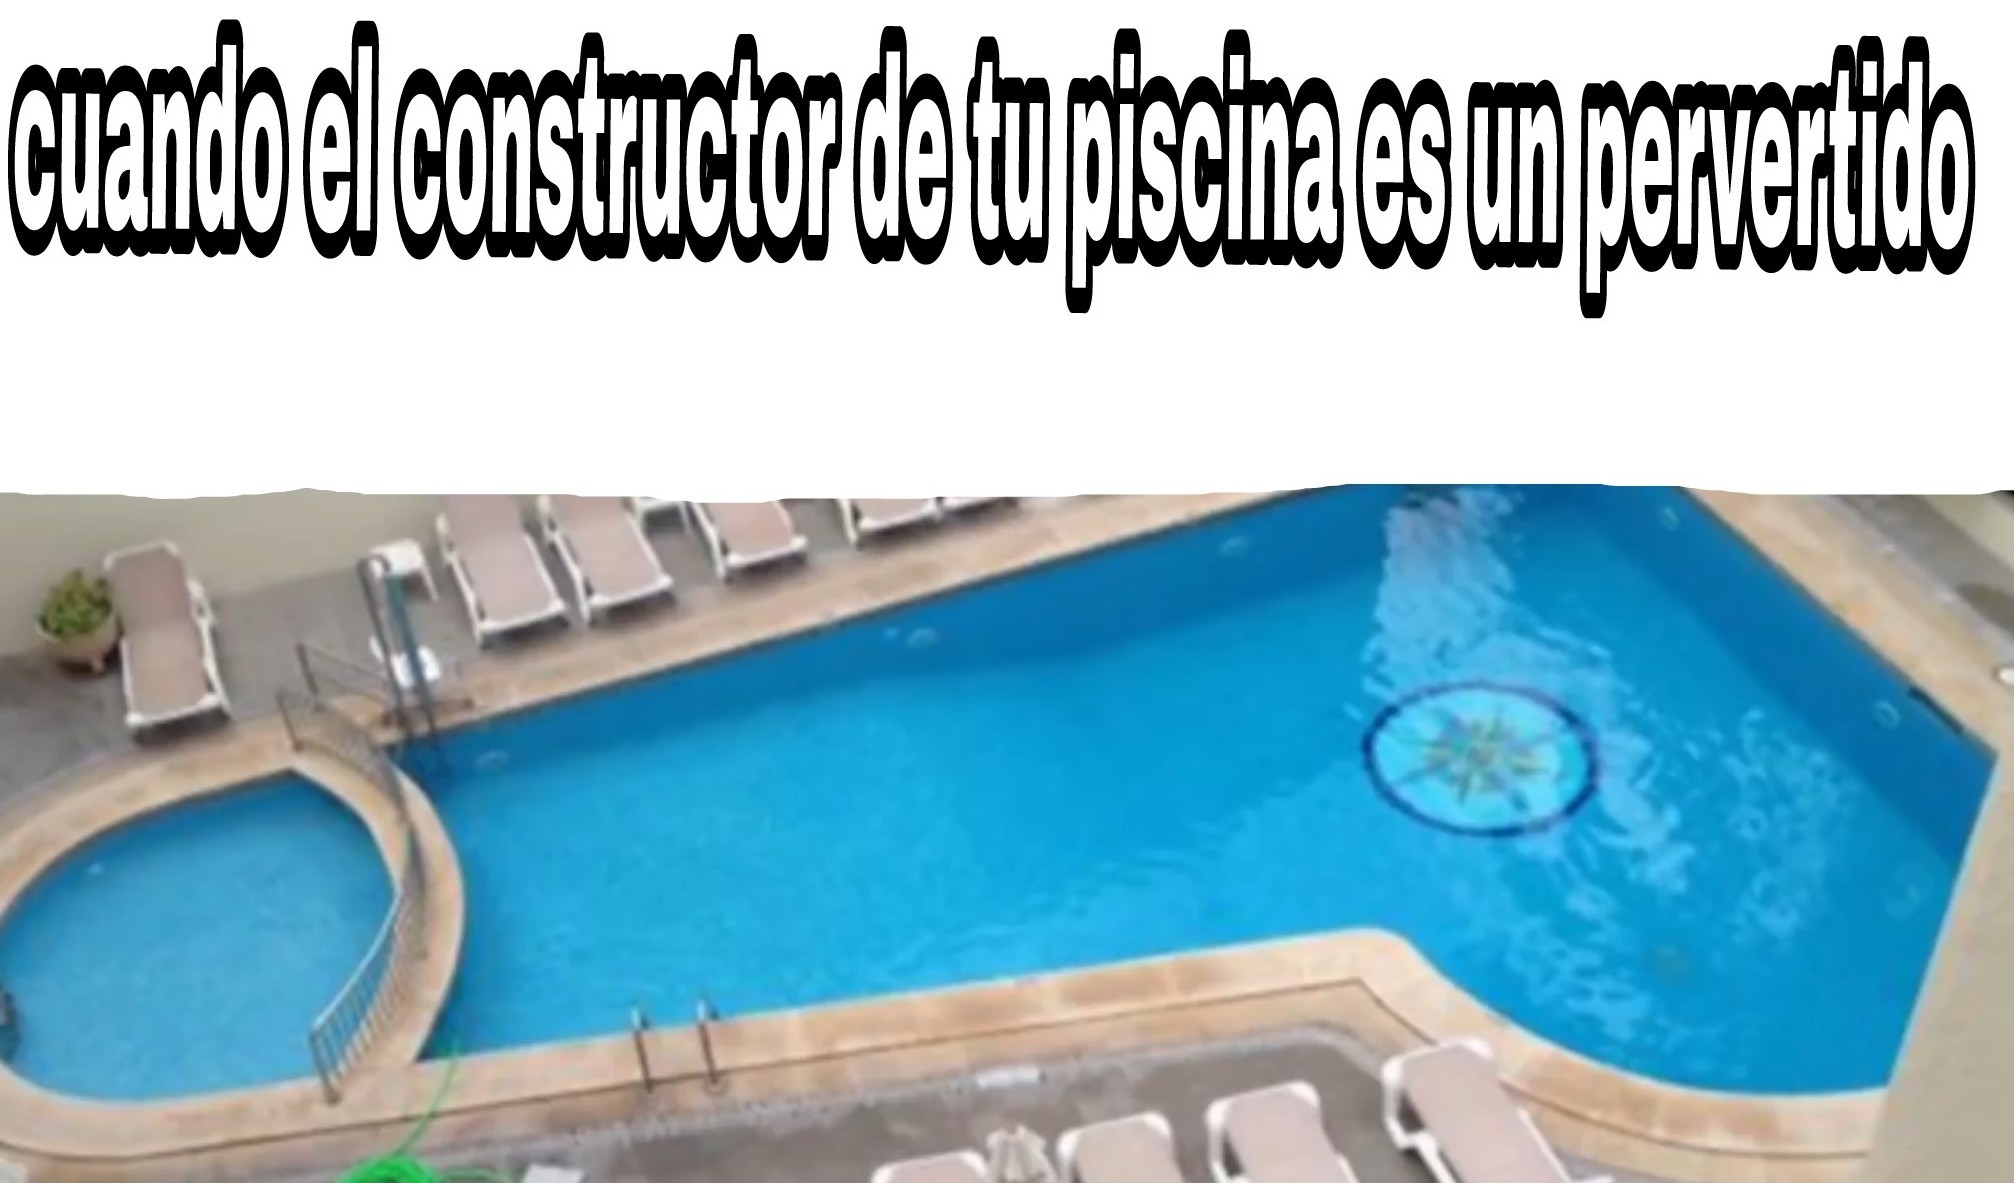 Constructor pervertido - meme